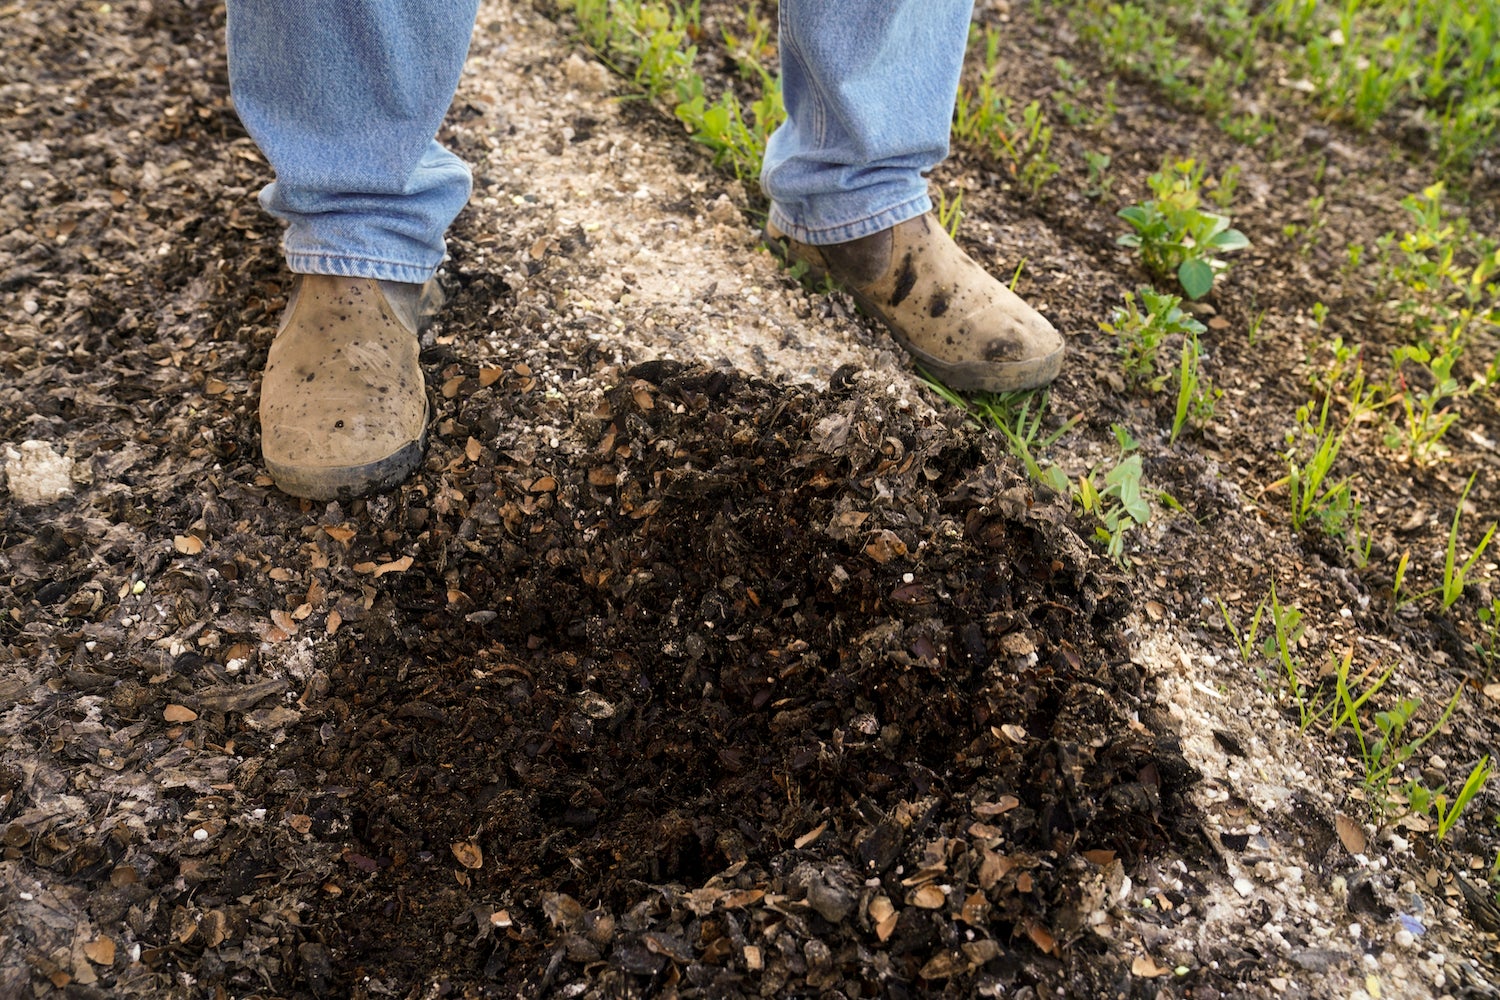 Beneath Kirk Pumphrey's feet is almond mulch. He has kicked the top layer off to reveal dark, moist soil underneath the mulch. (Karin Higgins/UC Davis)